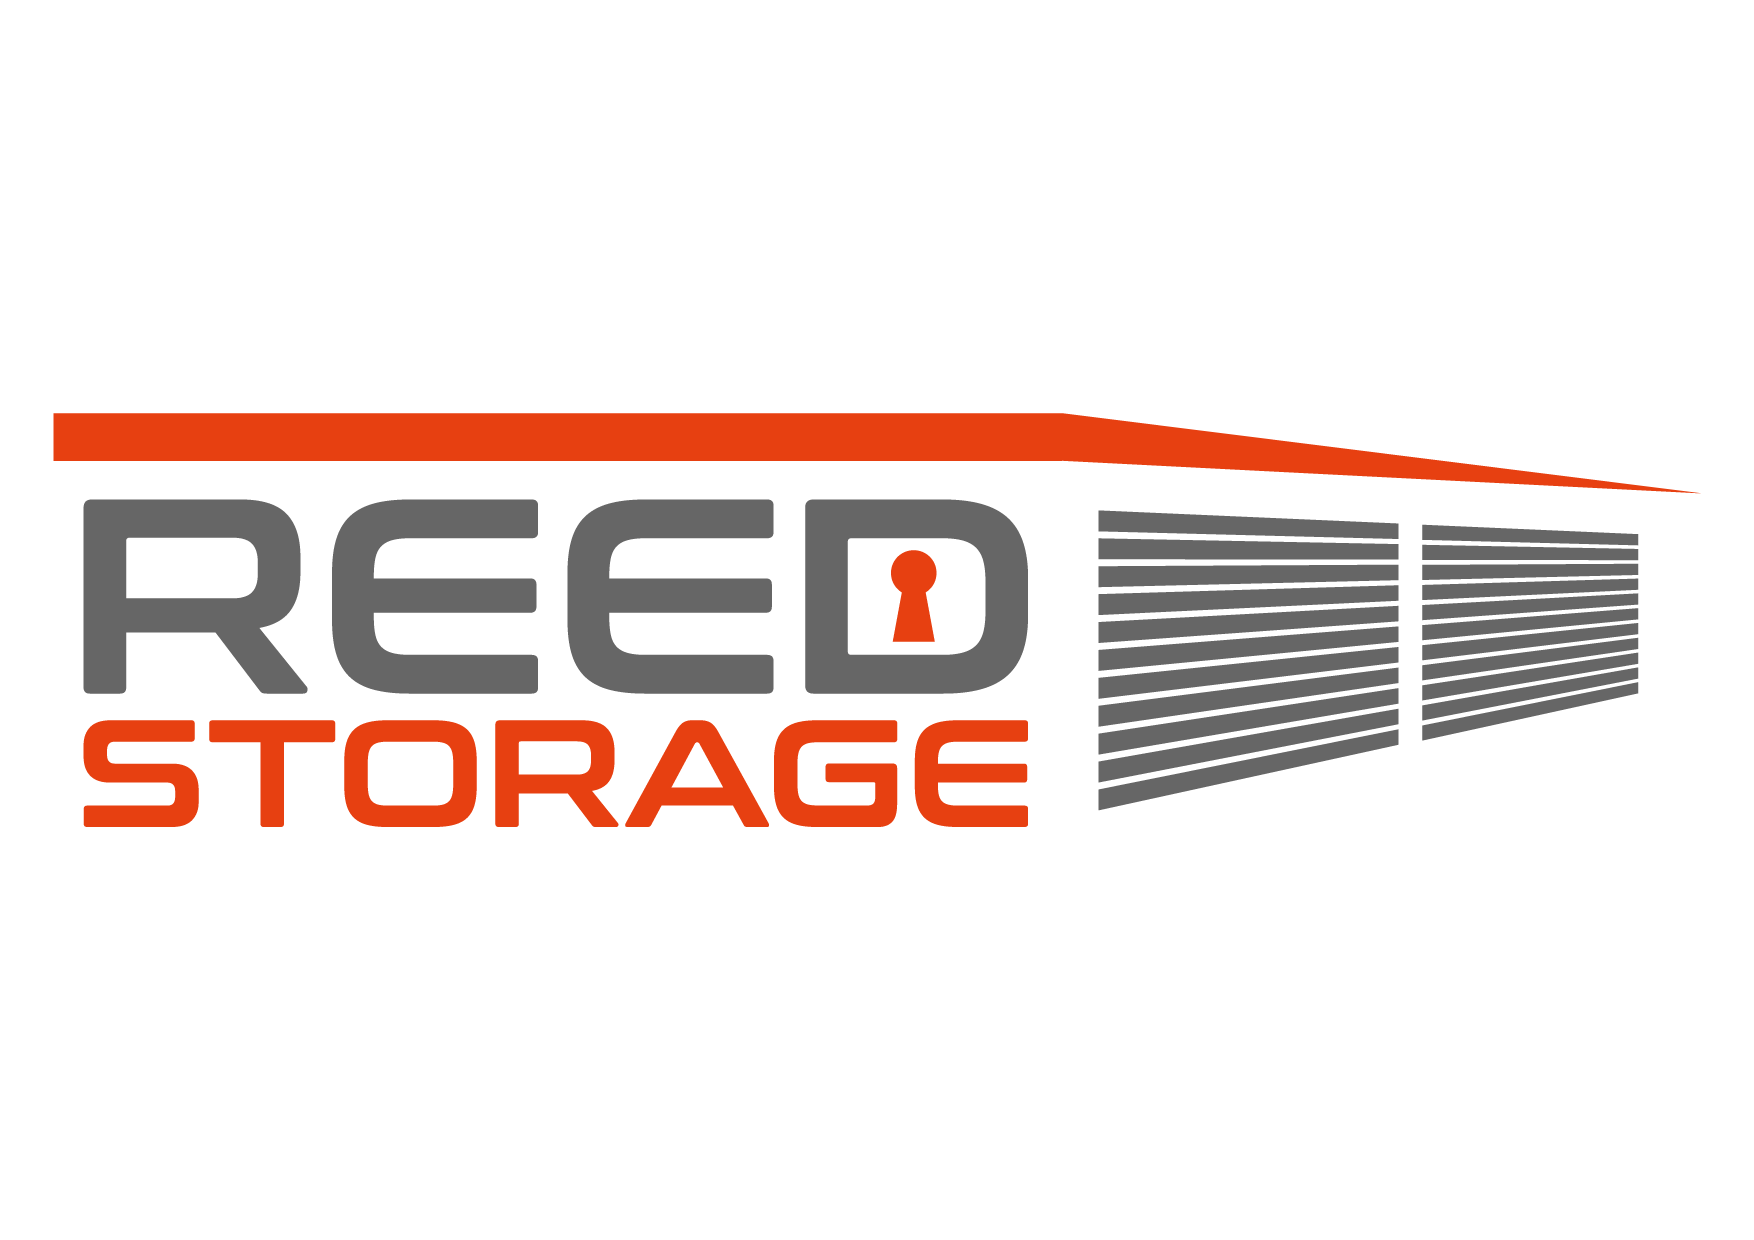 Reed Storage